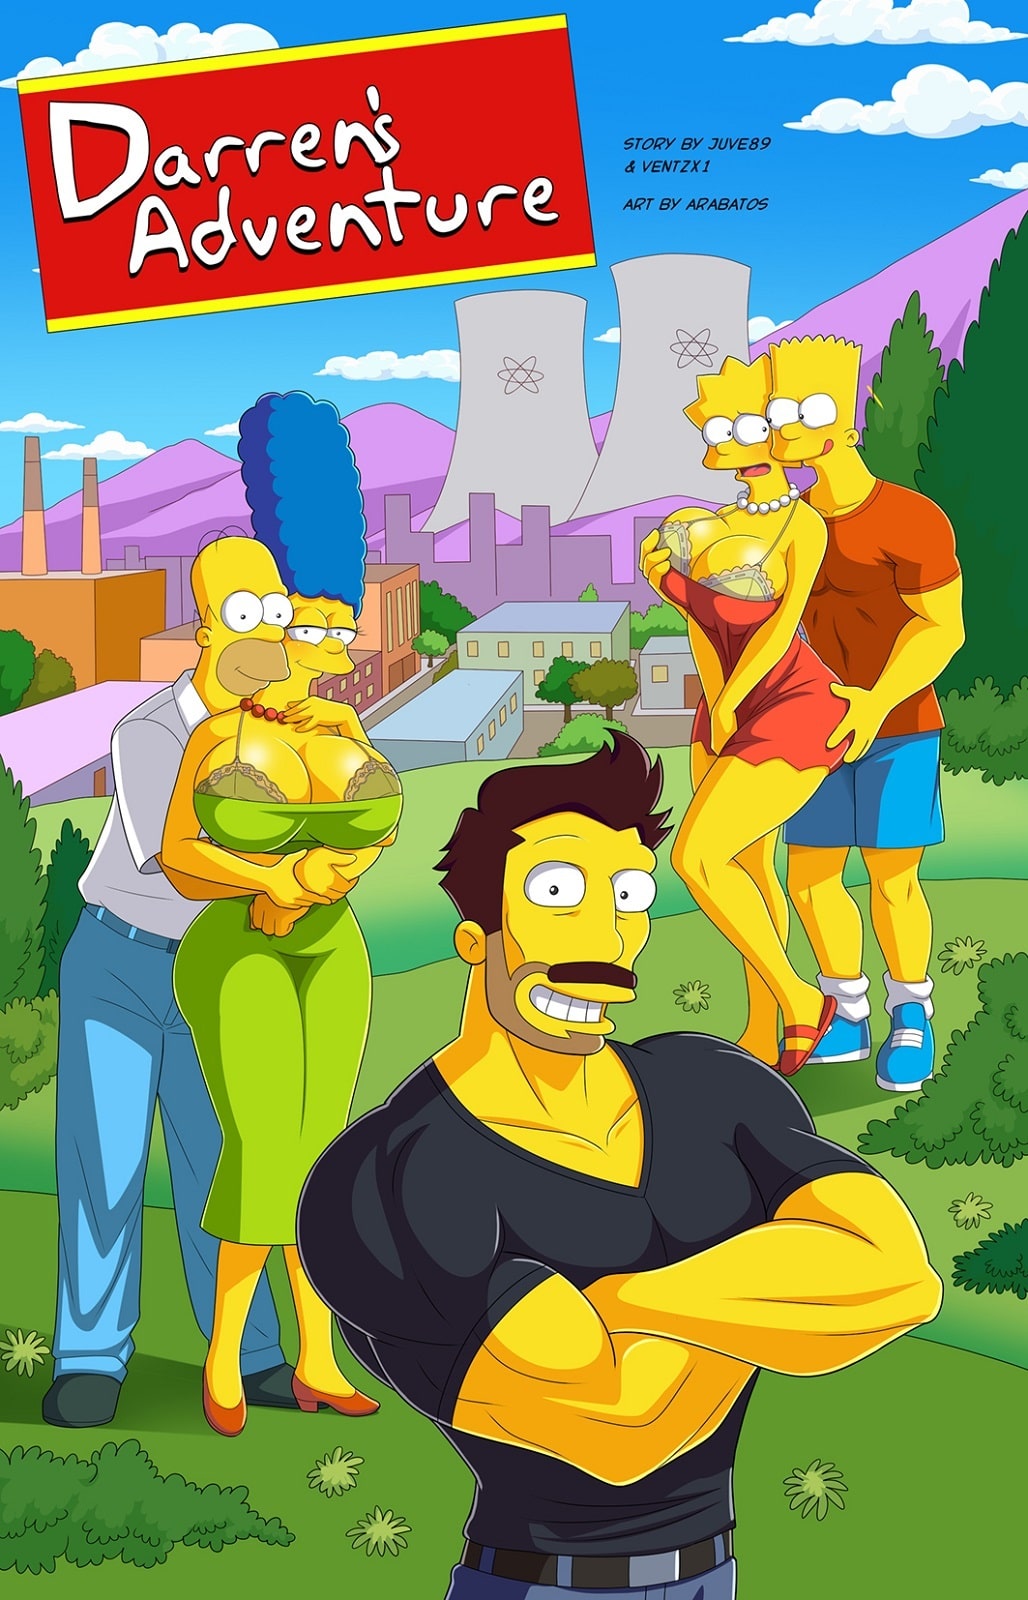 Darrens Adventure by Arabatos - Simpsons image